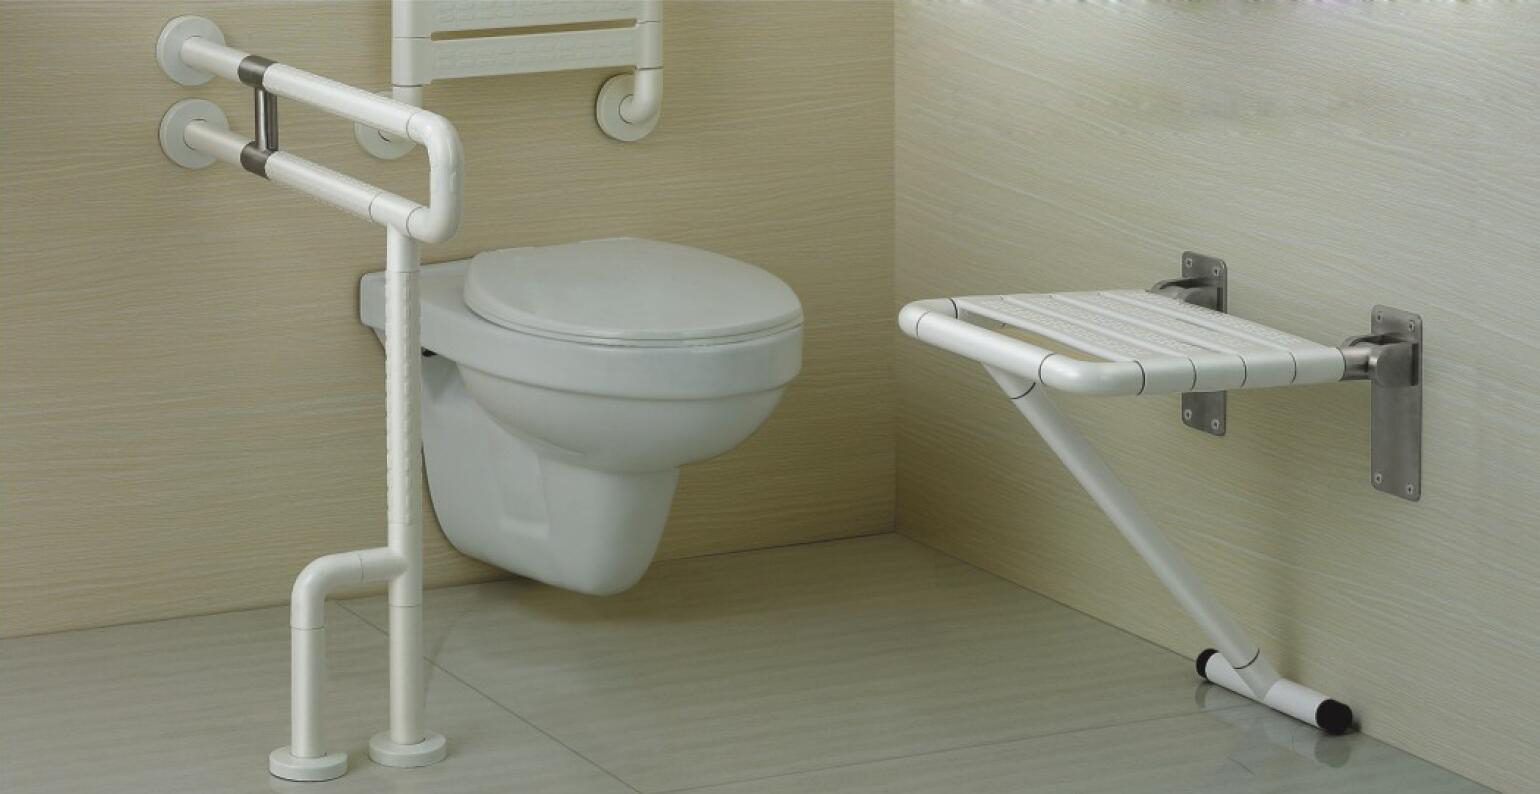 Quae sunt rationes popularitatis Wall-Hung Toilets?